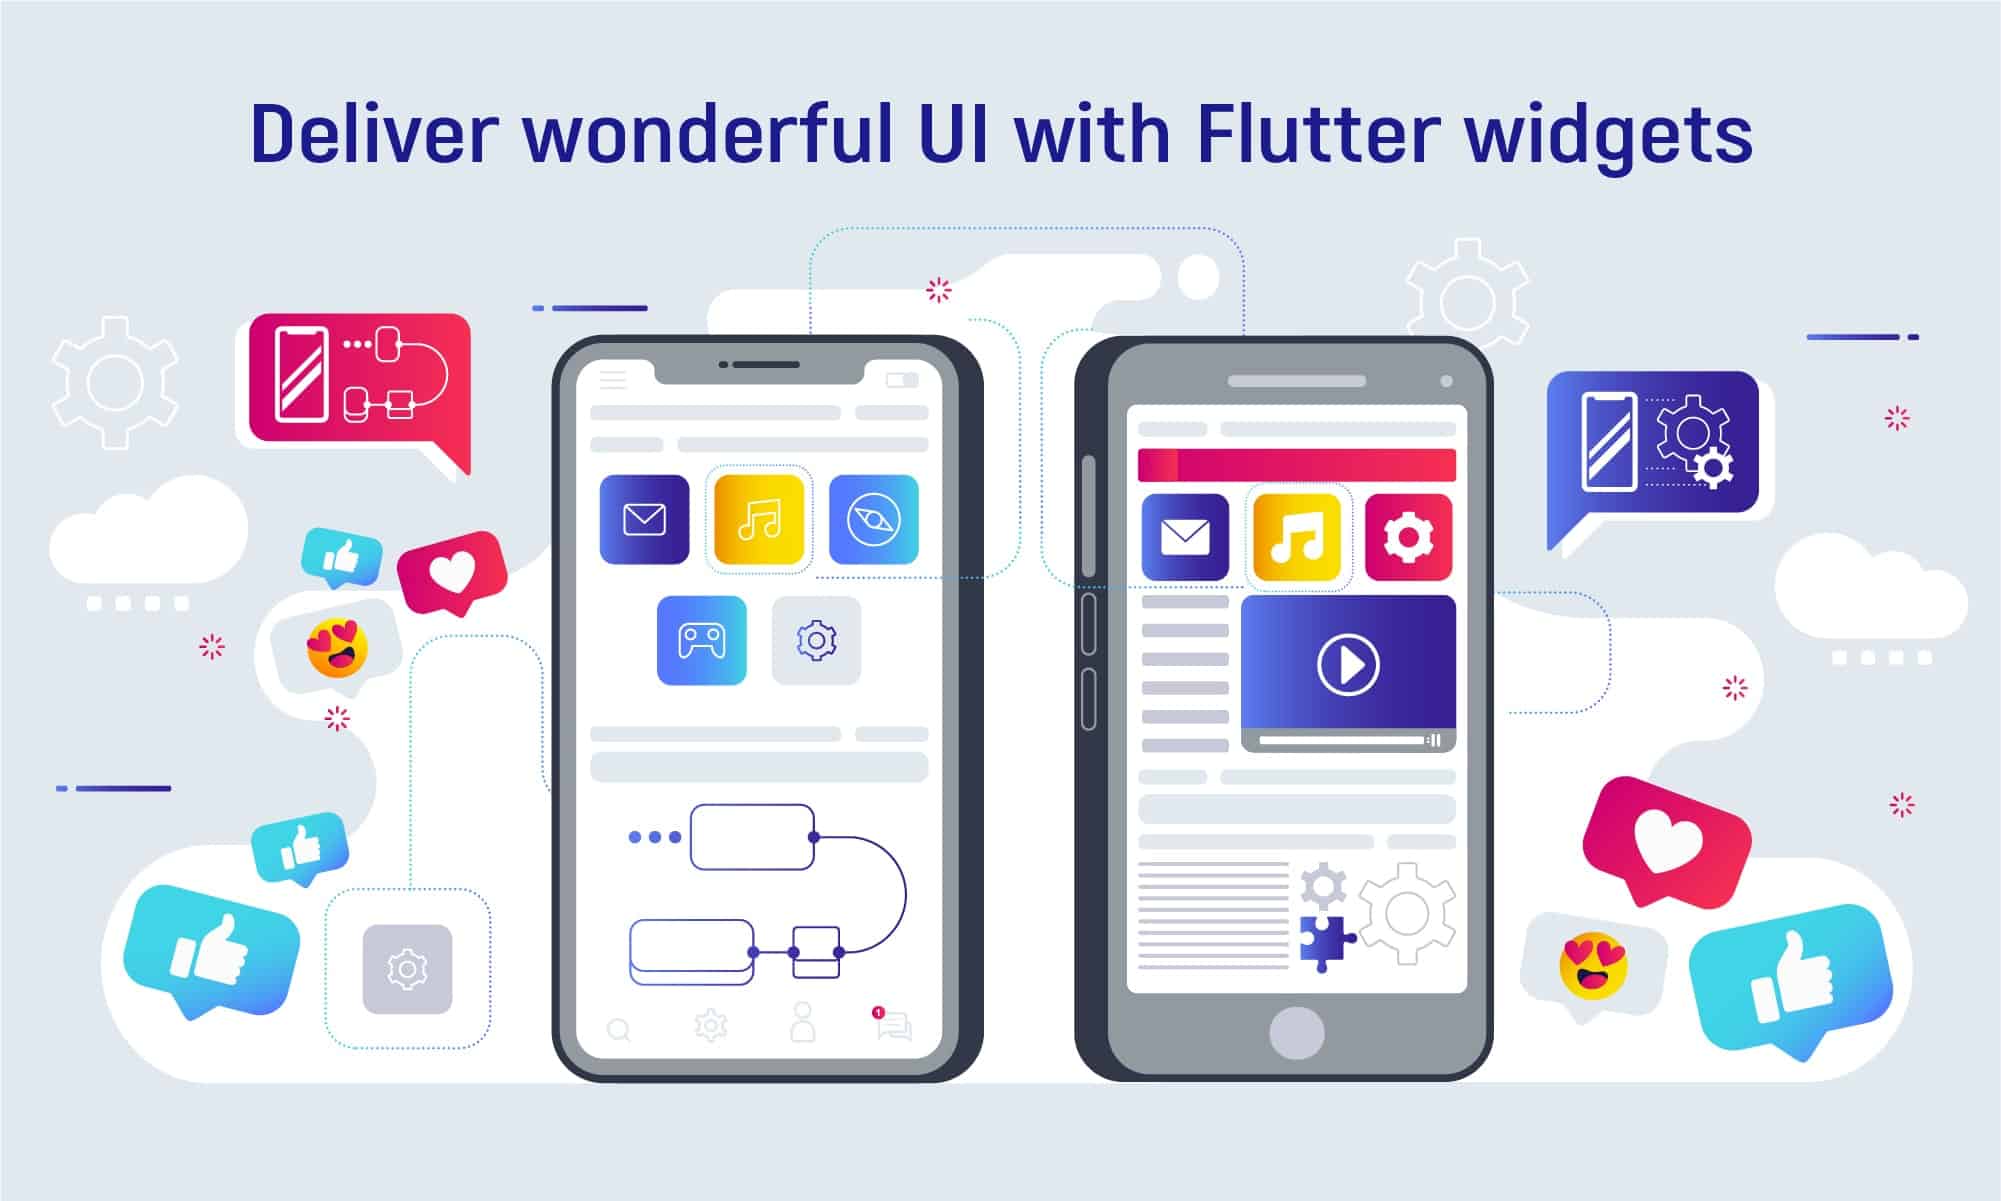 Wonderful user interface (UI) design as benefit of using Flutter